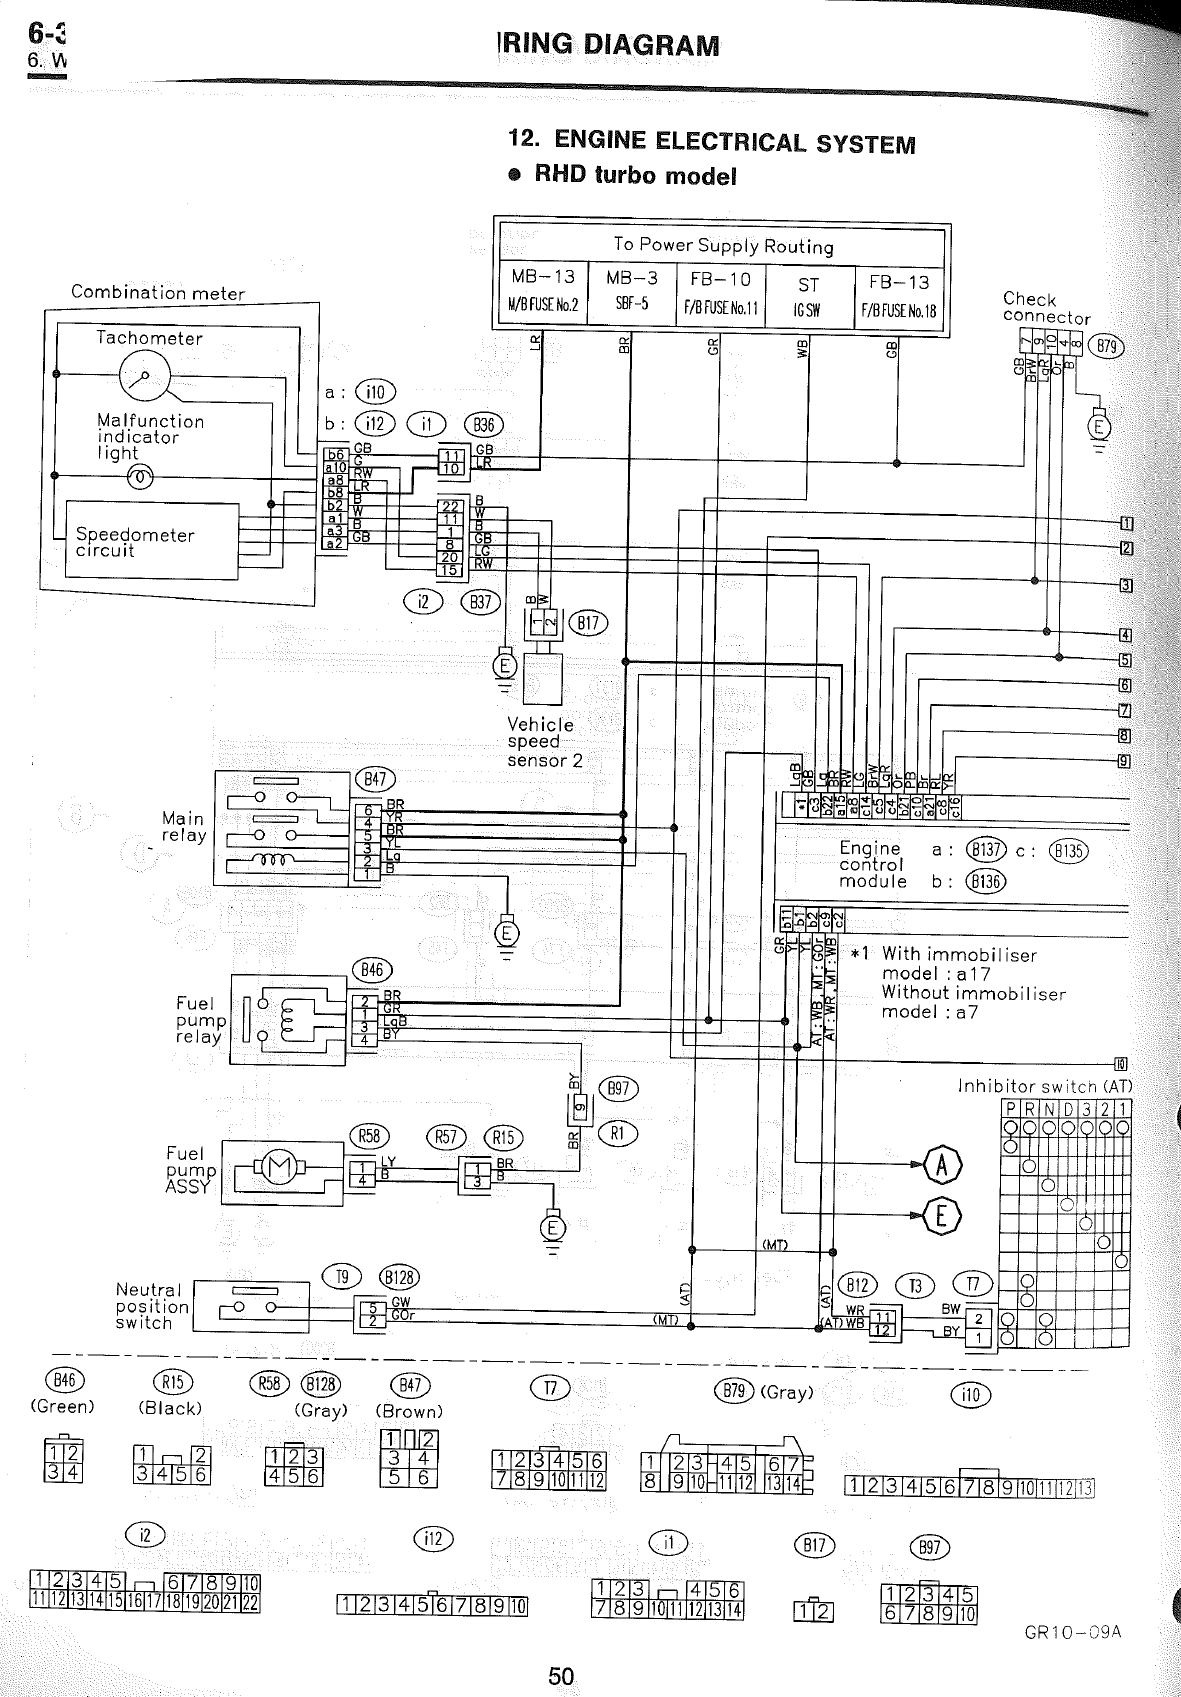 1999 Fuel pump wiring schematics - ScoobyNet.com - Subaru Enthusiast Forum